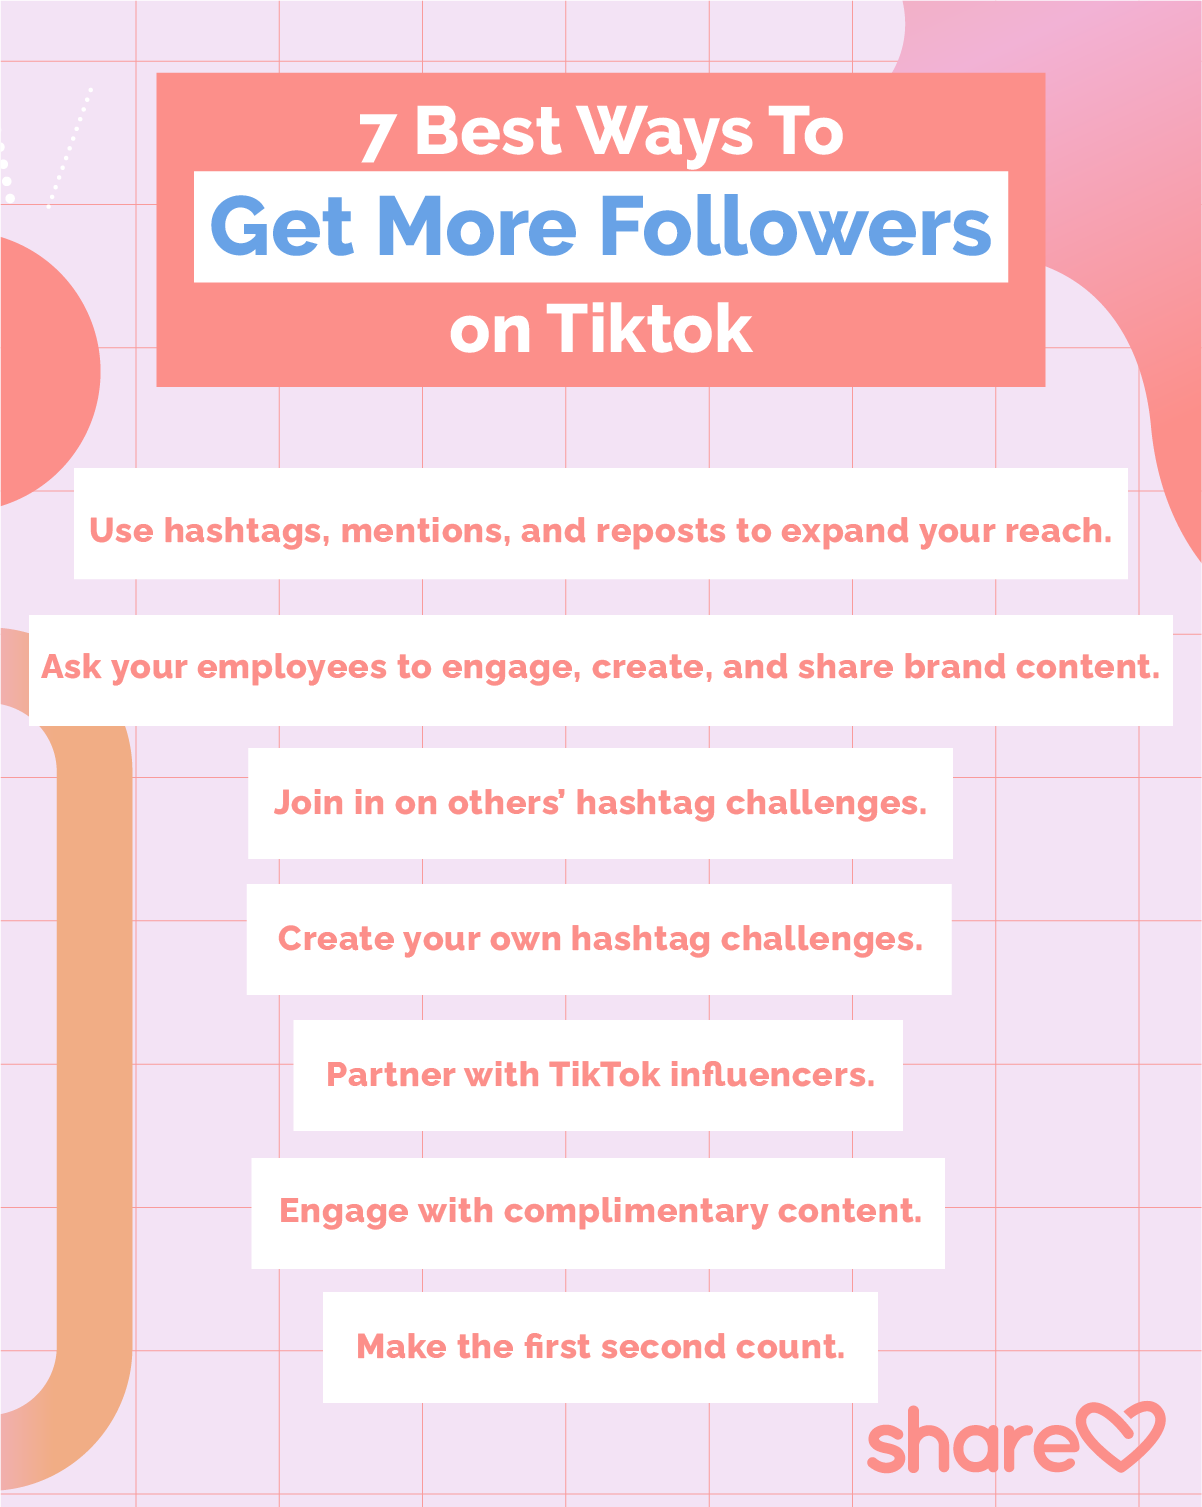 7 best ways to get more followers on TikTok